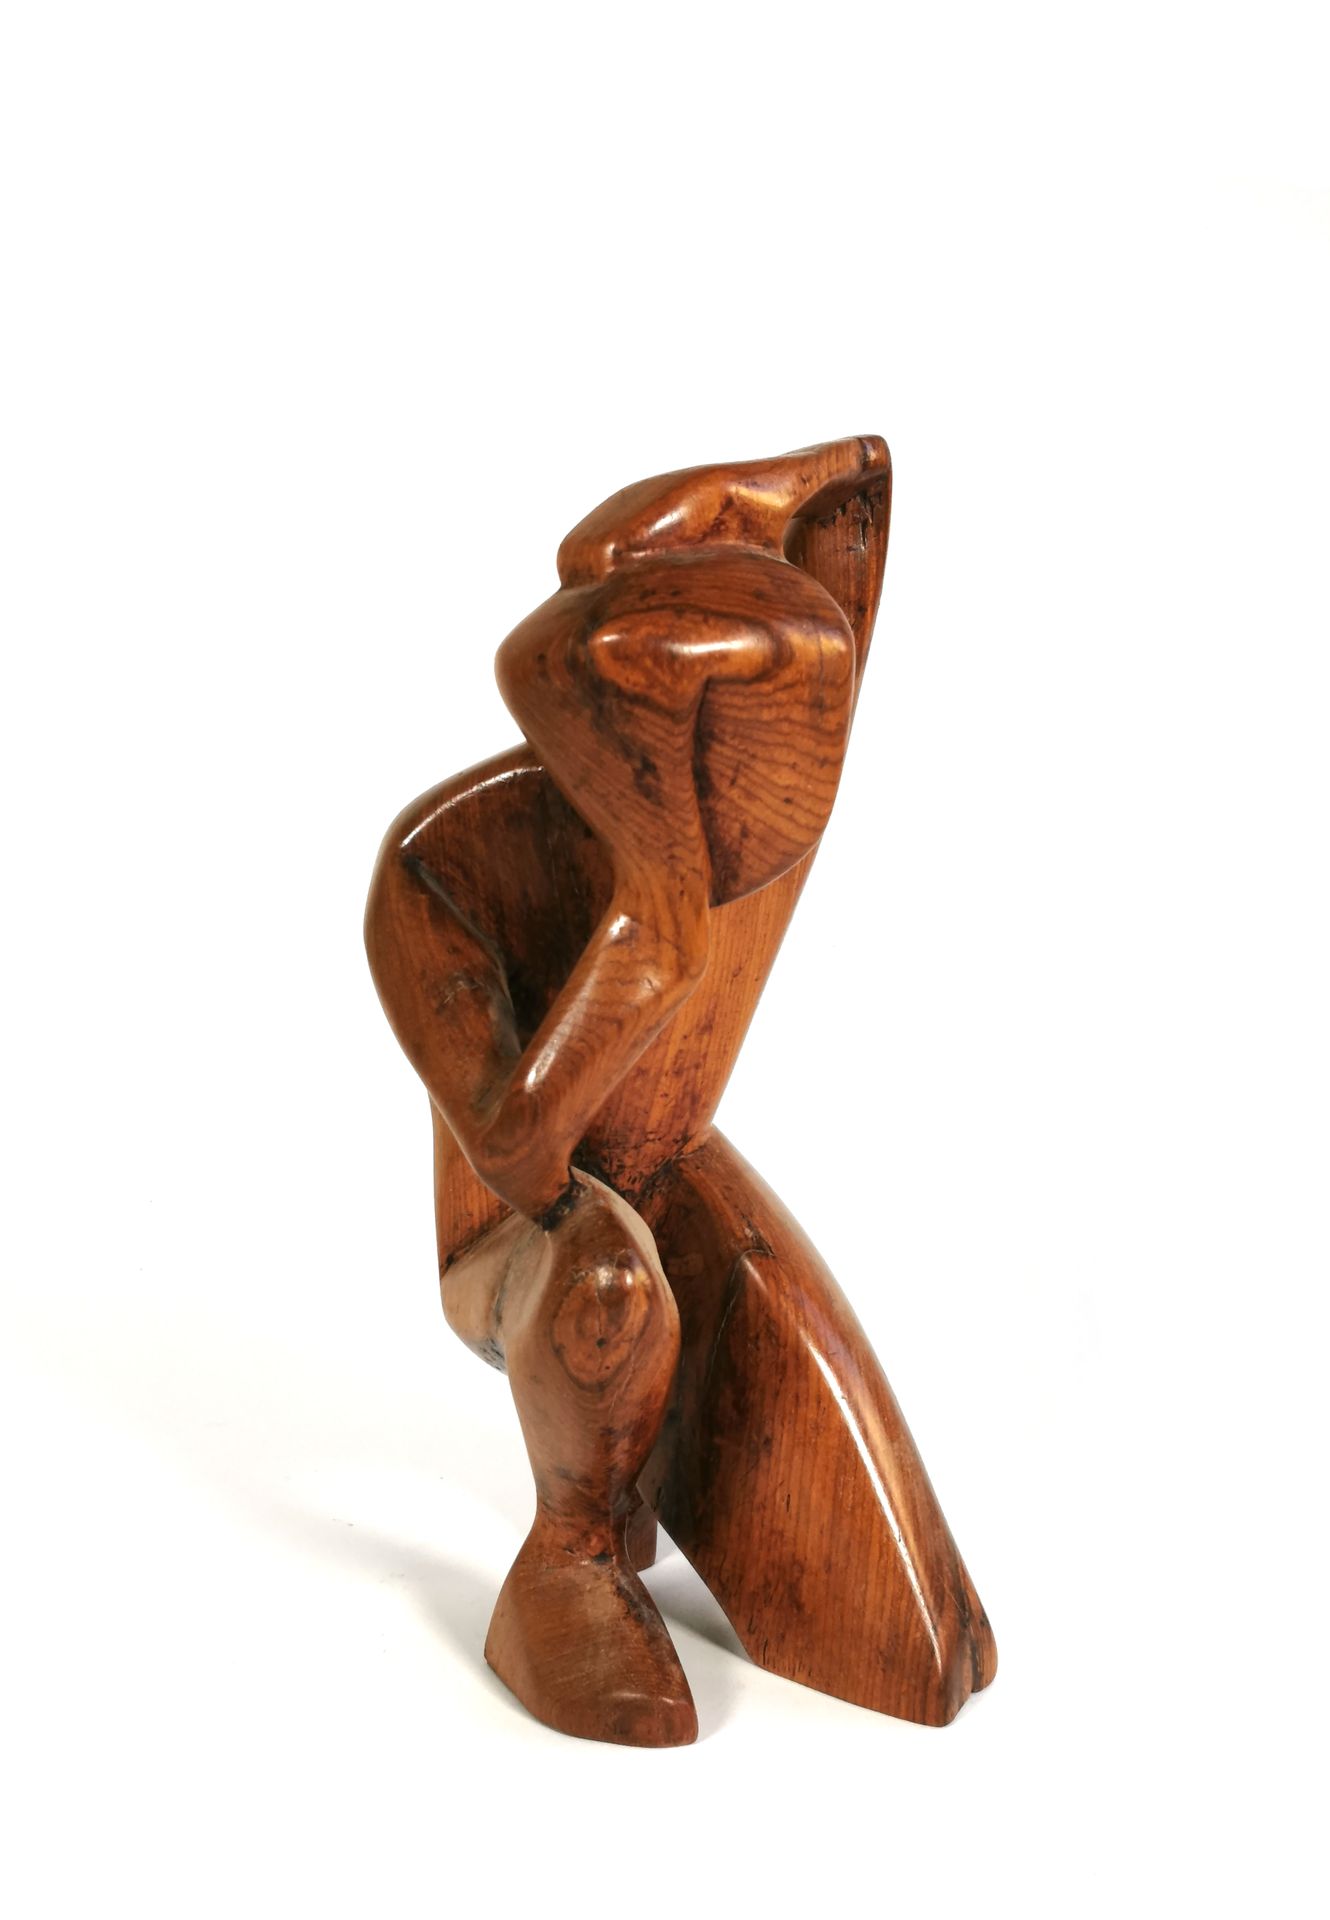 Null 1980年代的作品

"卧底"。

在木头上直接雕刻。

H.31厘米